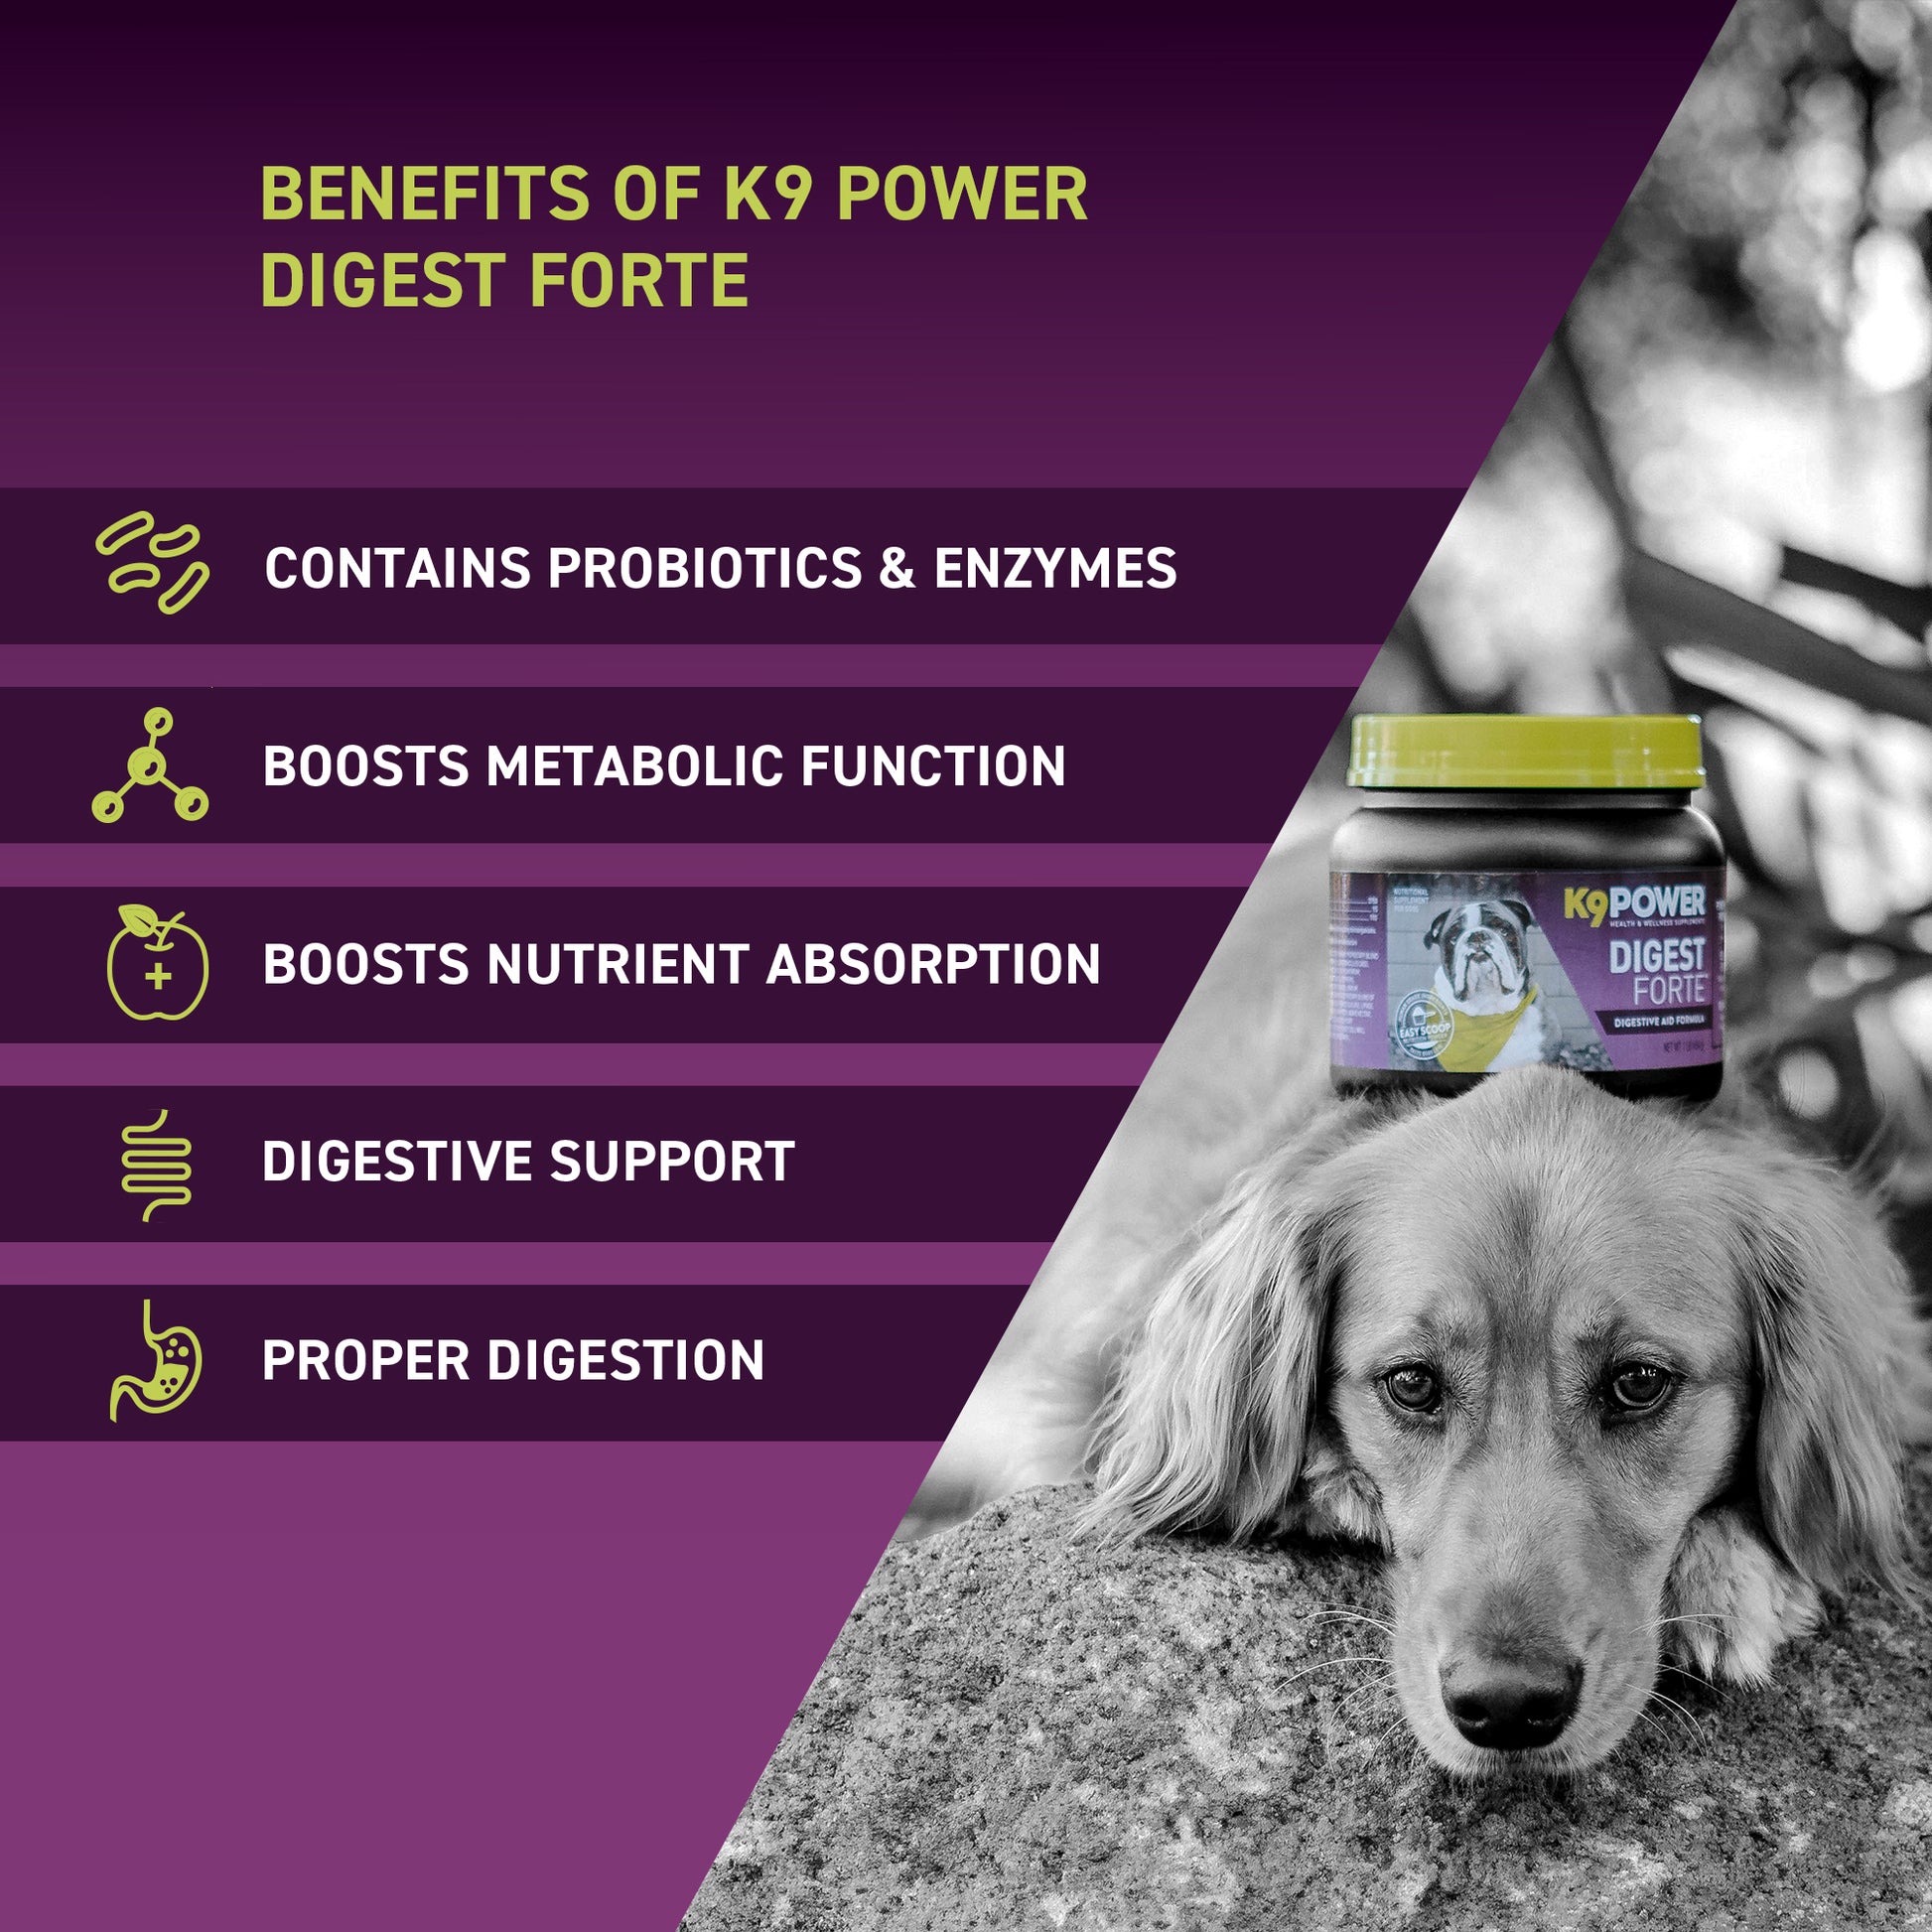 Benefits of Digest Forte